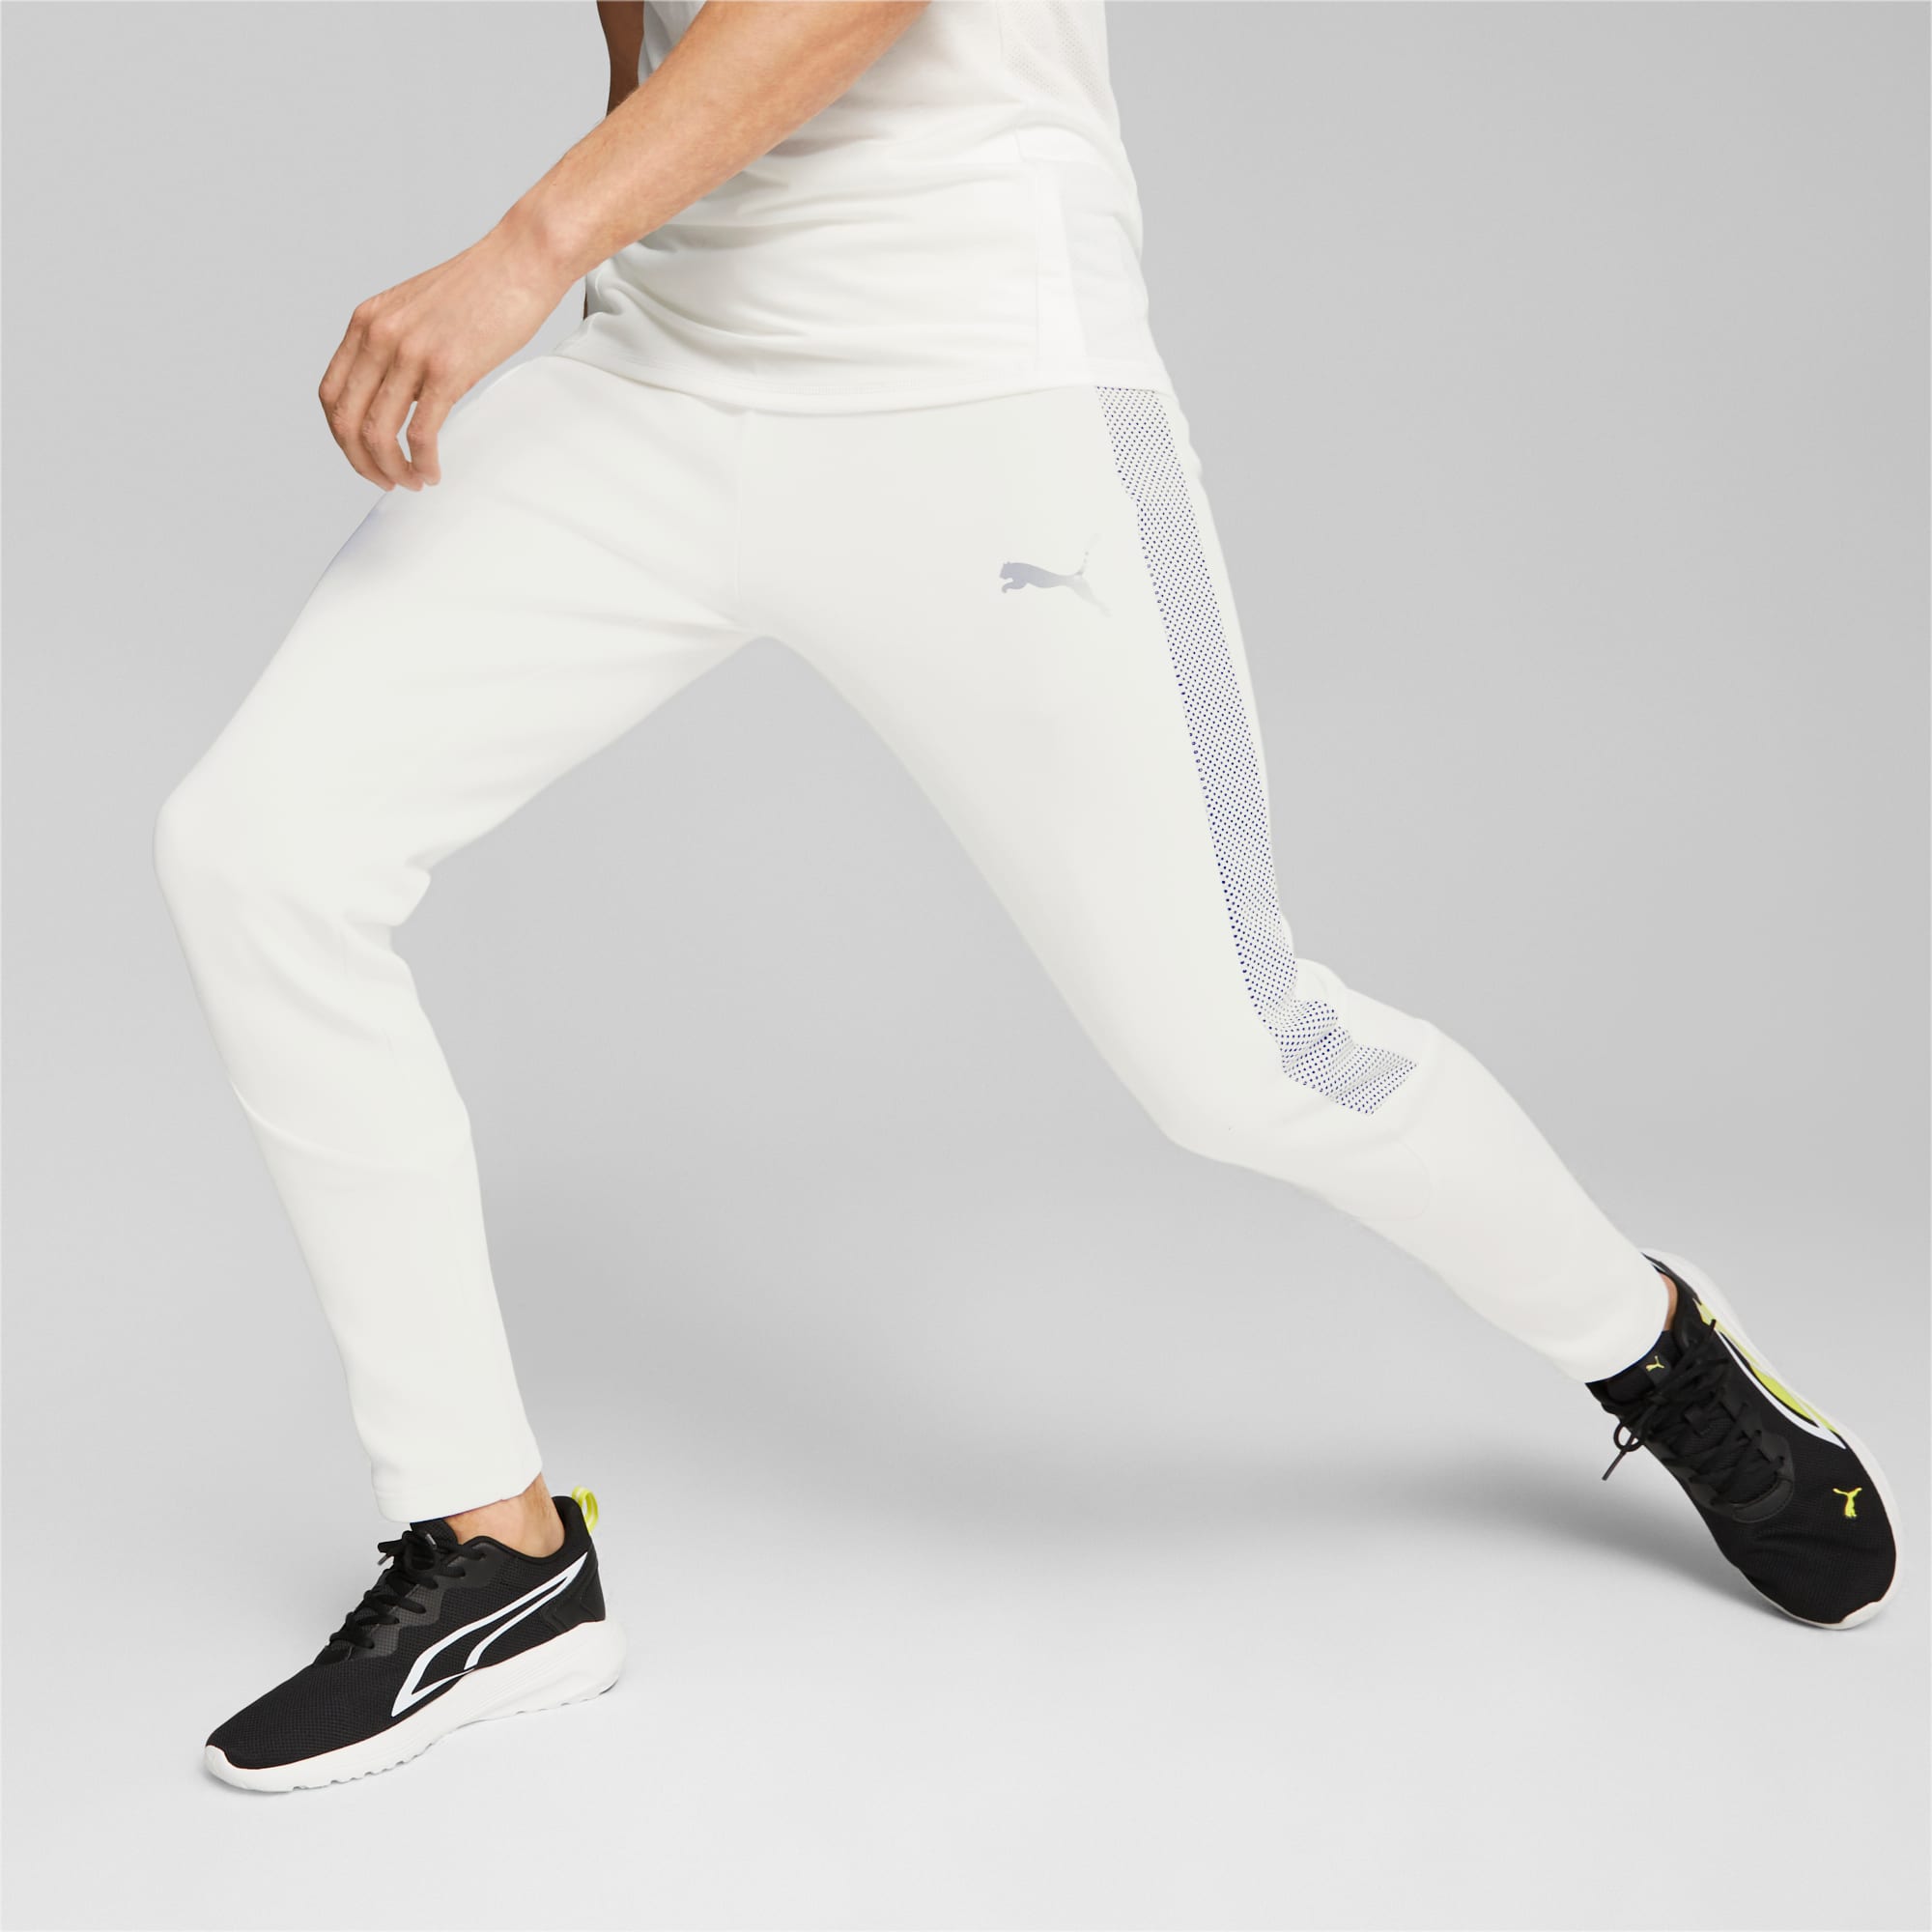 PUMA Evostripe Men's Sweatpants, White